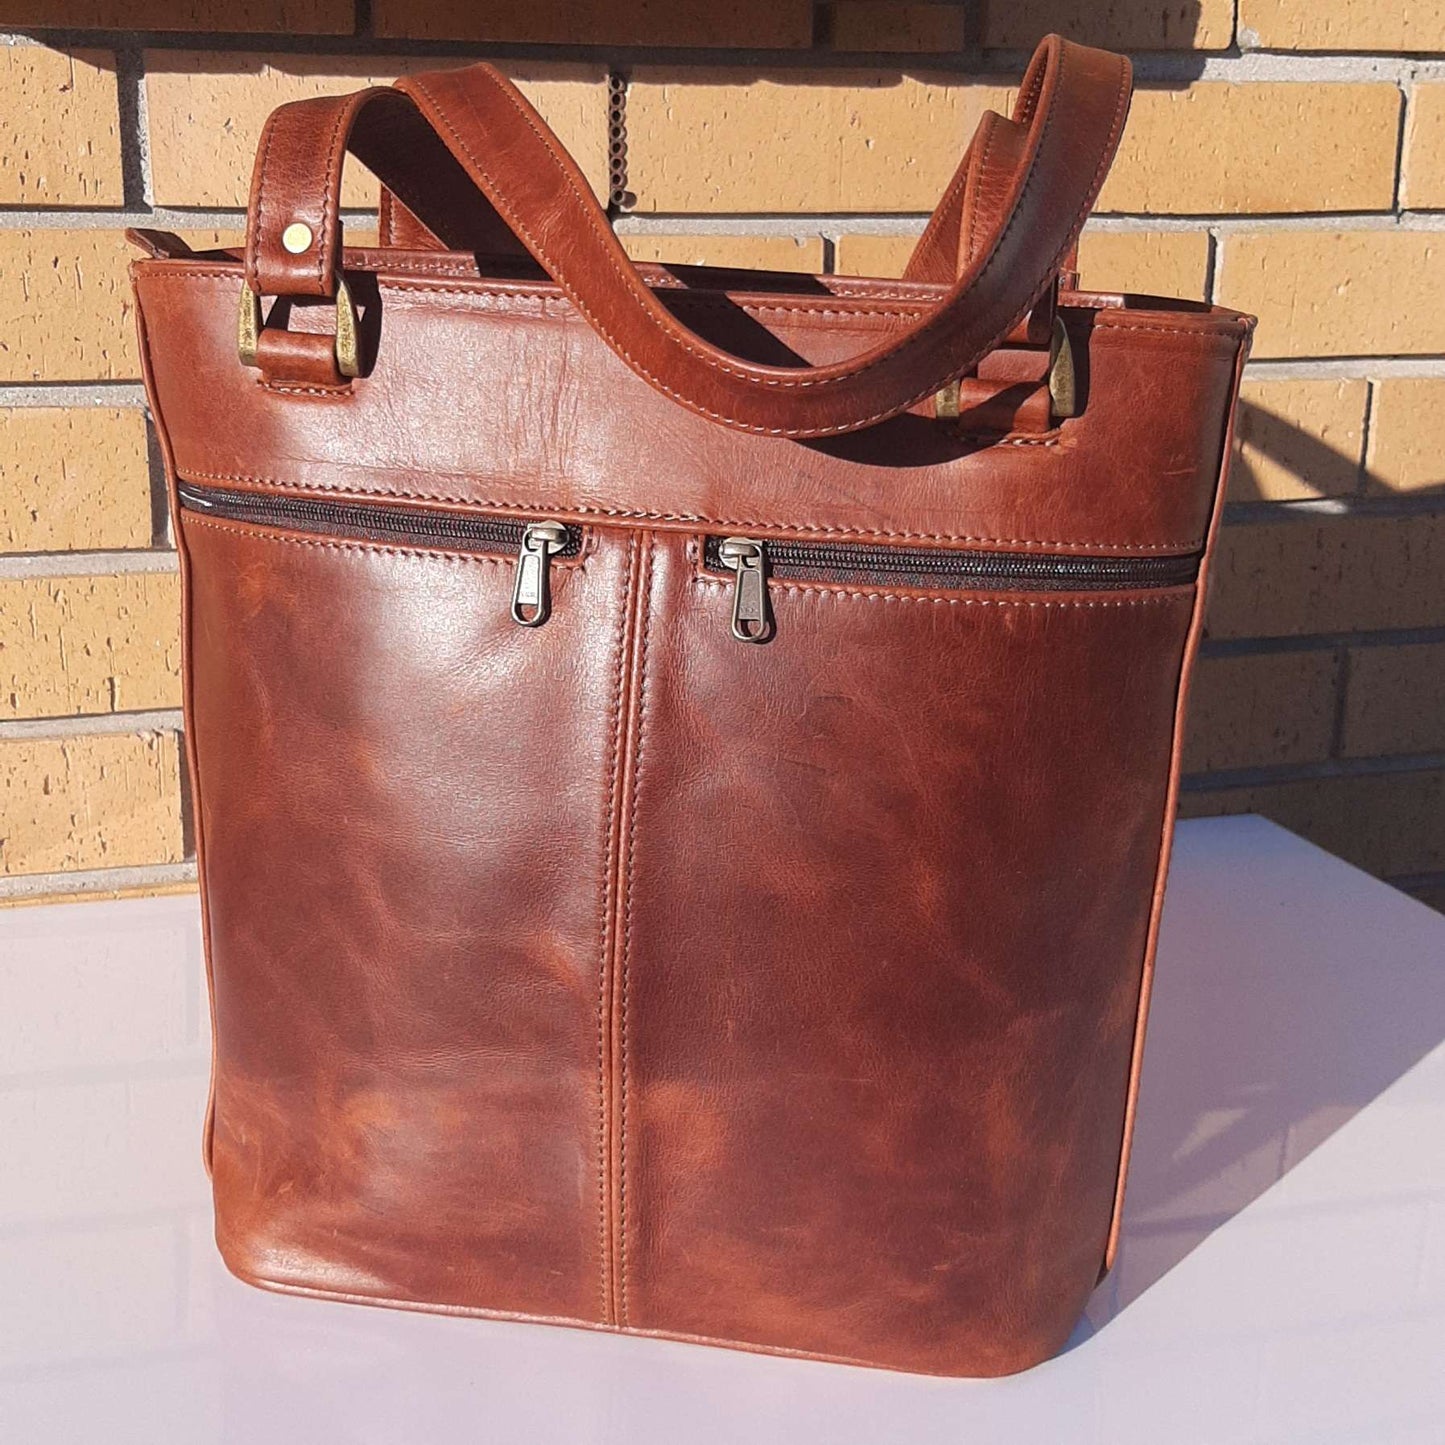 Lorex leather handbags